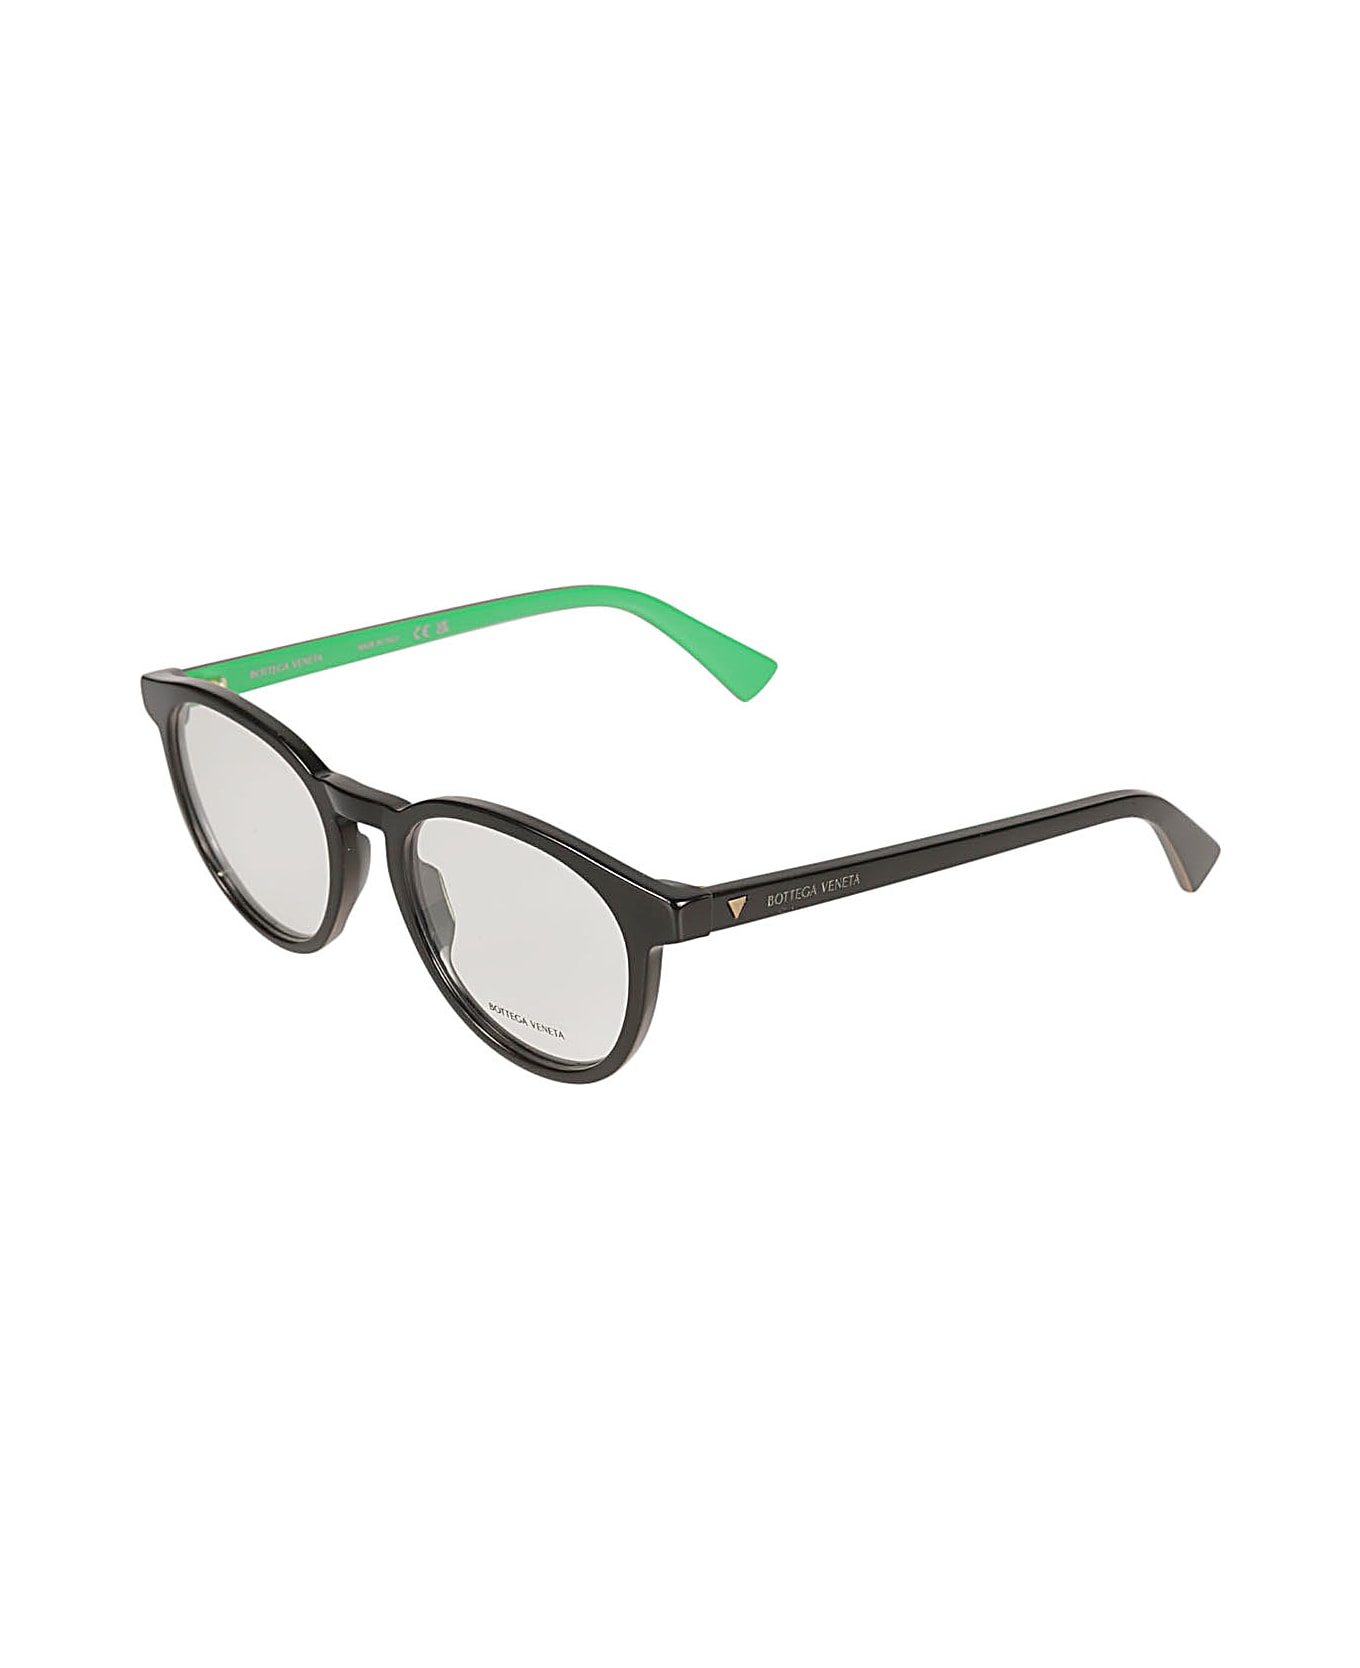 Bottega 41cm Veneta Eyewear Classic Round Frame Glasses - Black/Transparent